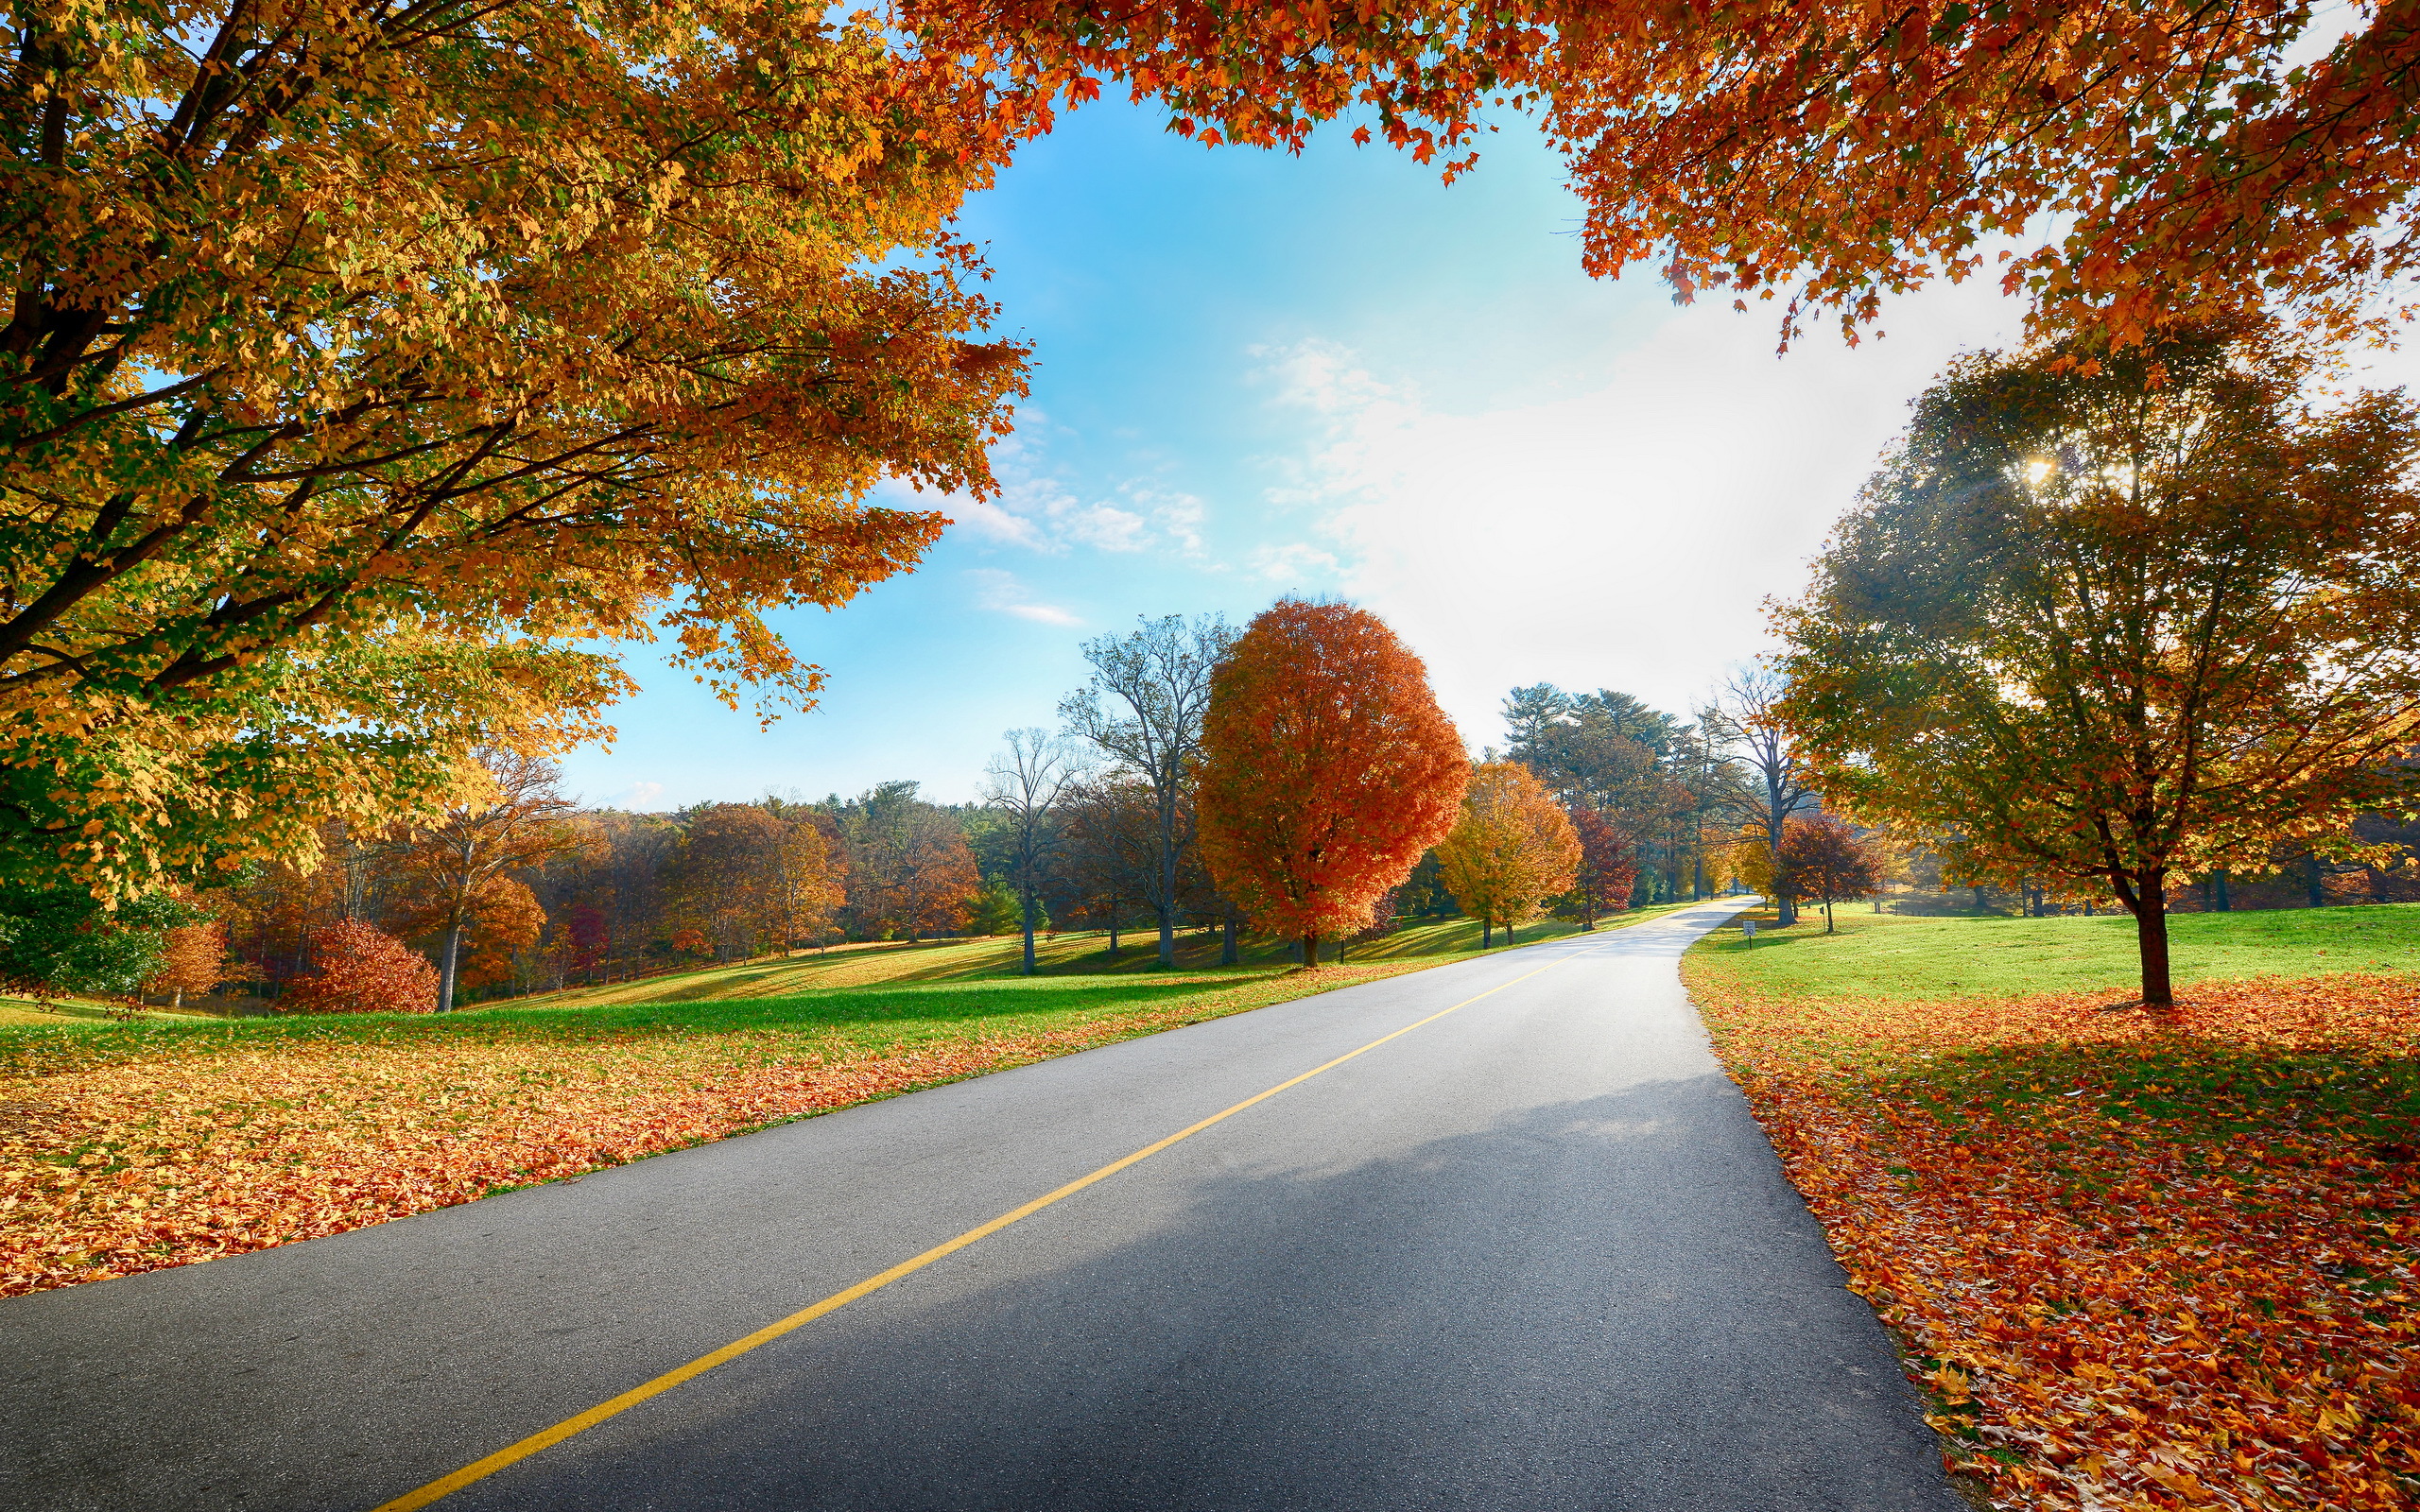 Autumn Tree Road Landscape